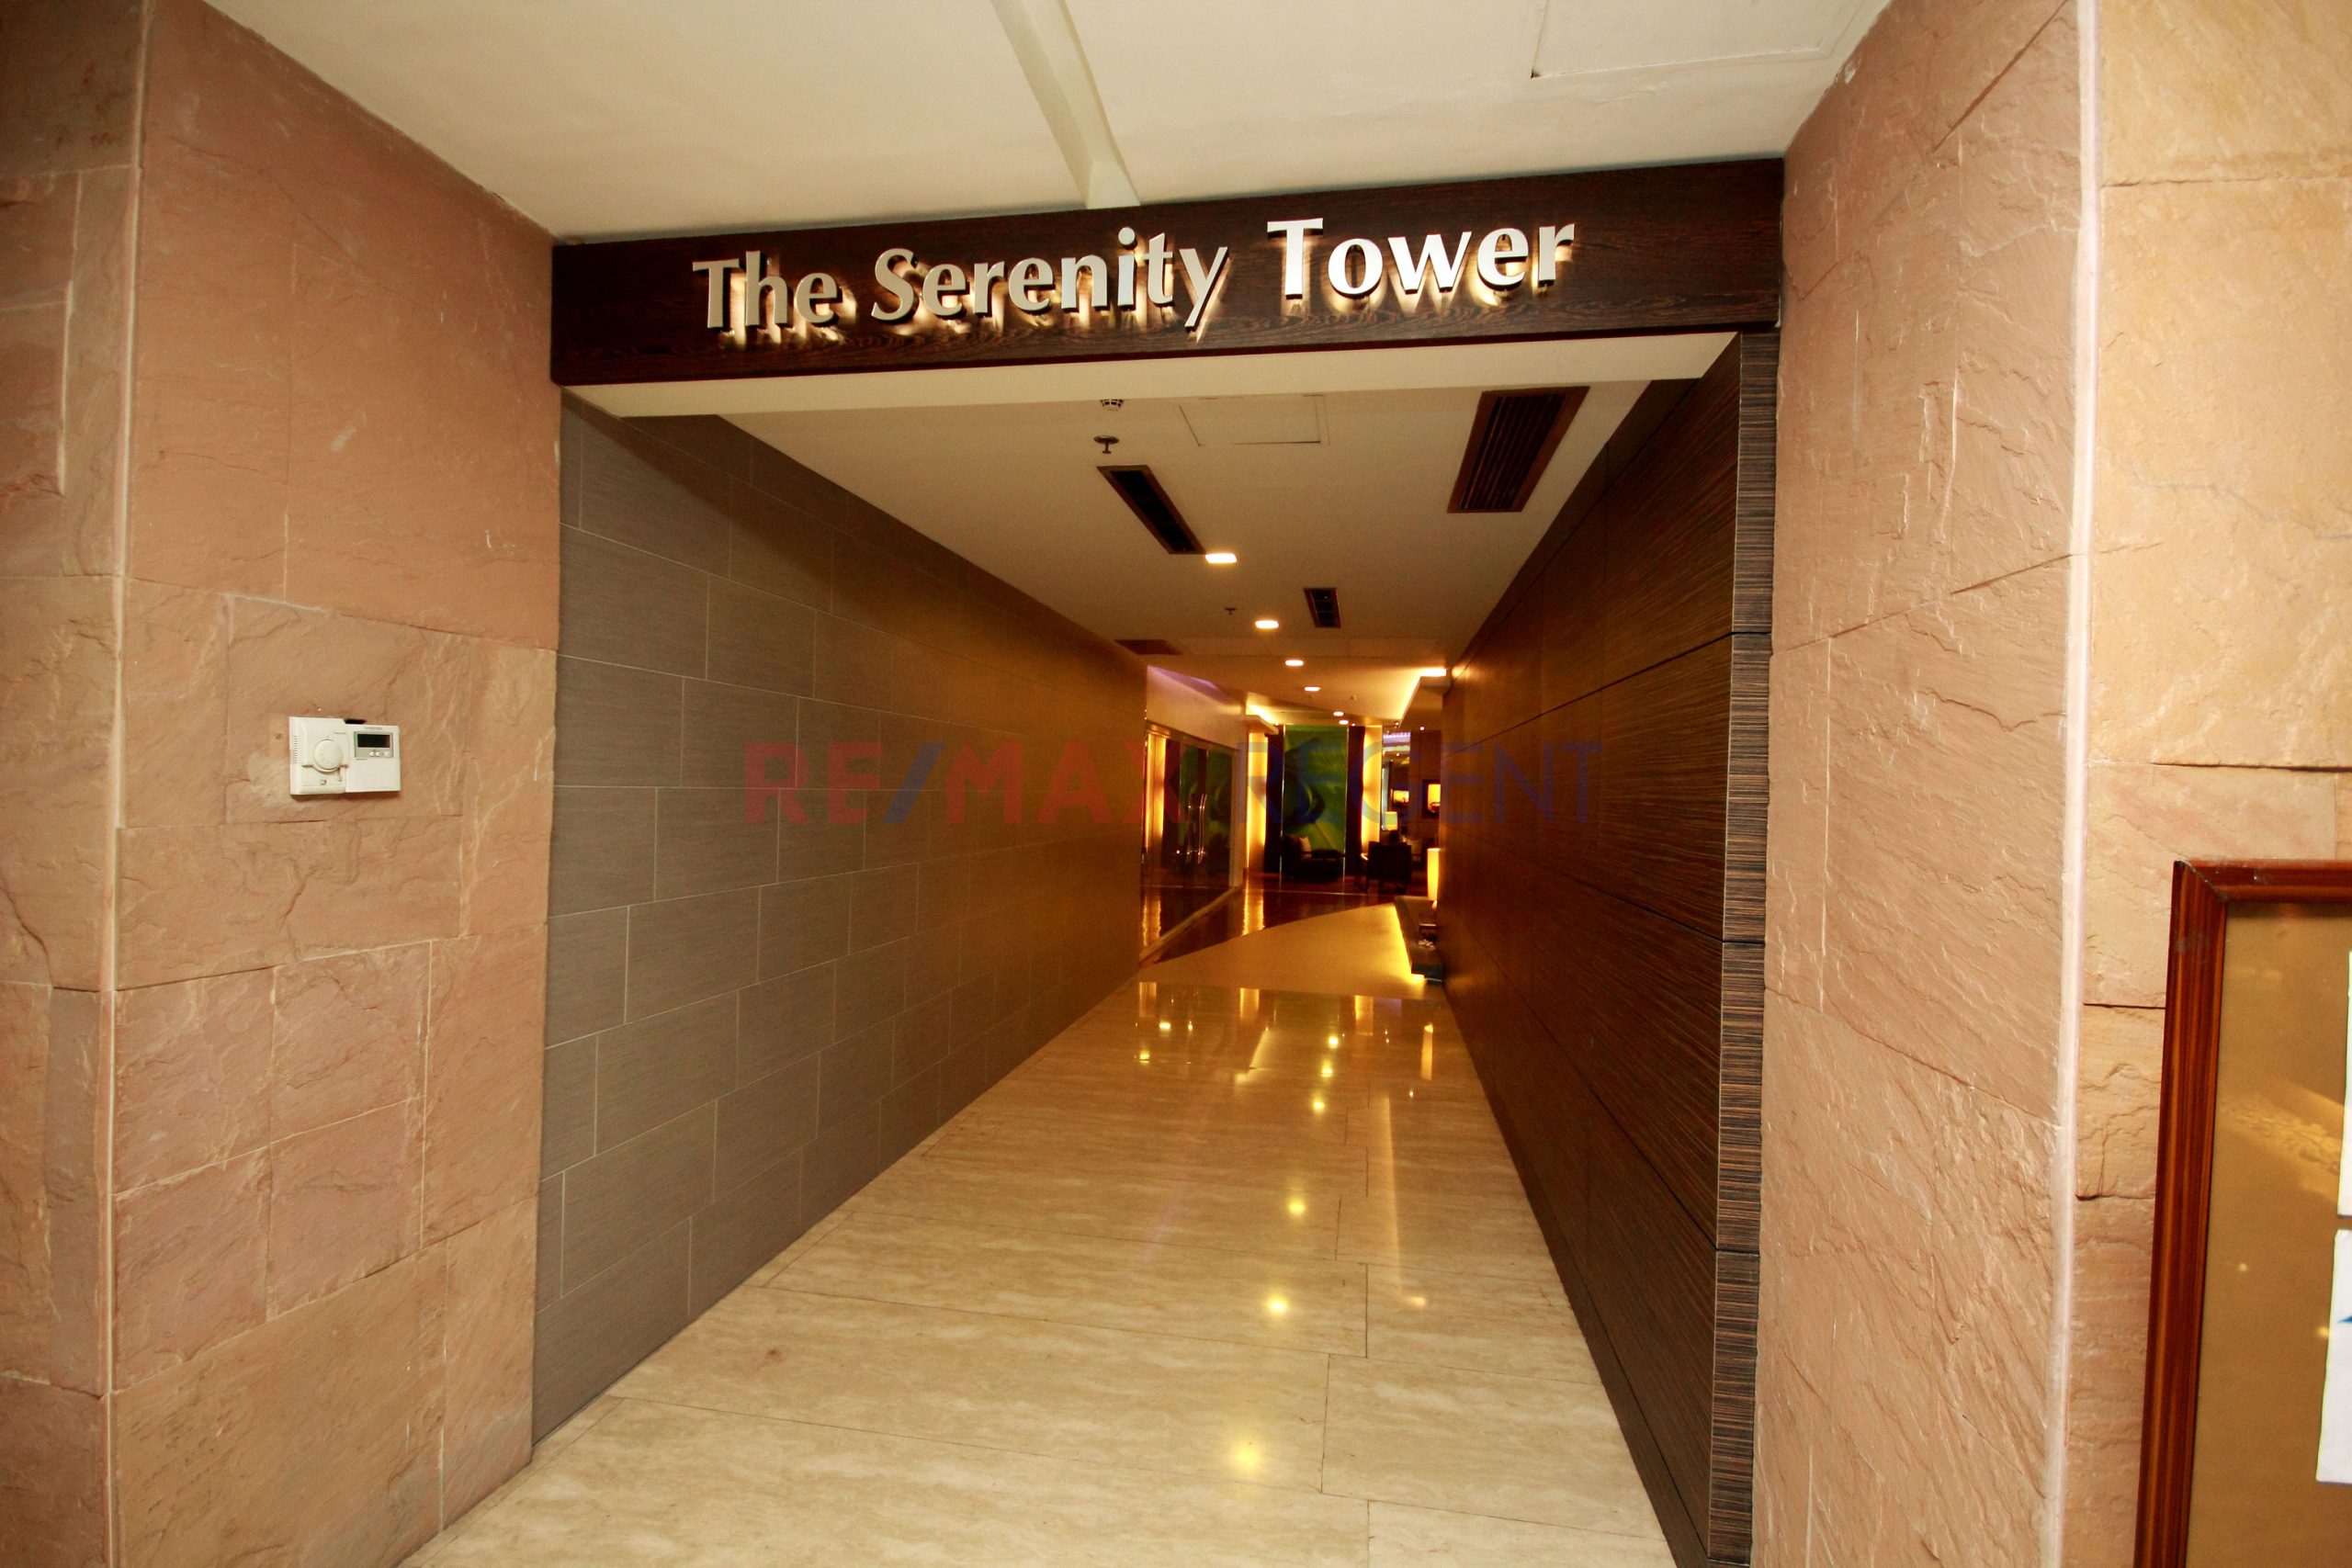 Condominium Unit for Sale in Antel Spa Suites & Serenity Tower, Makati City